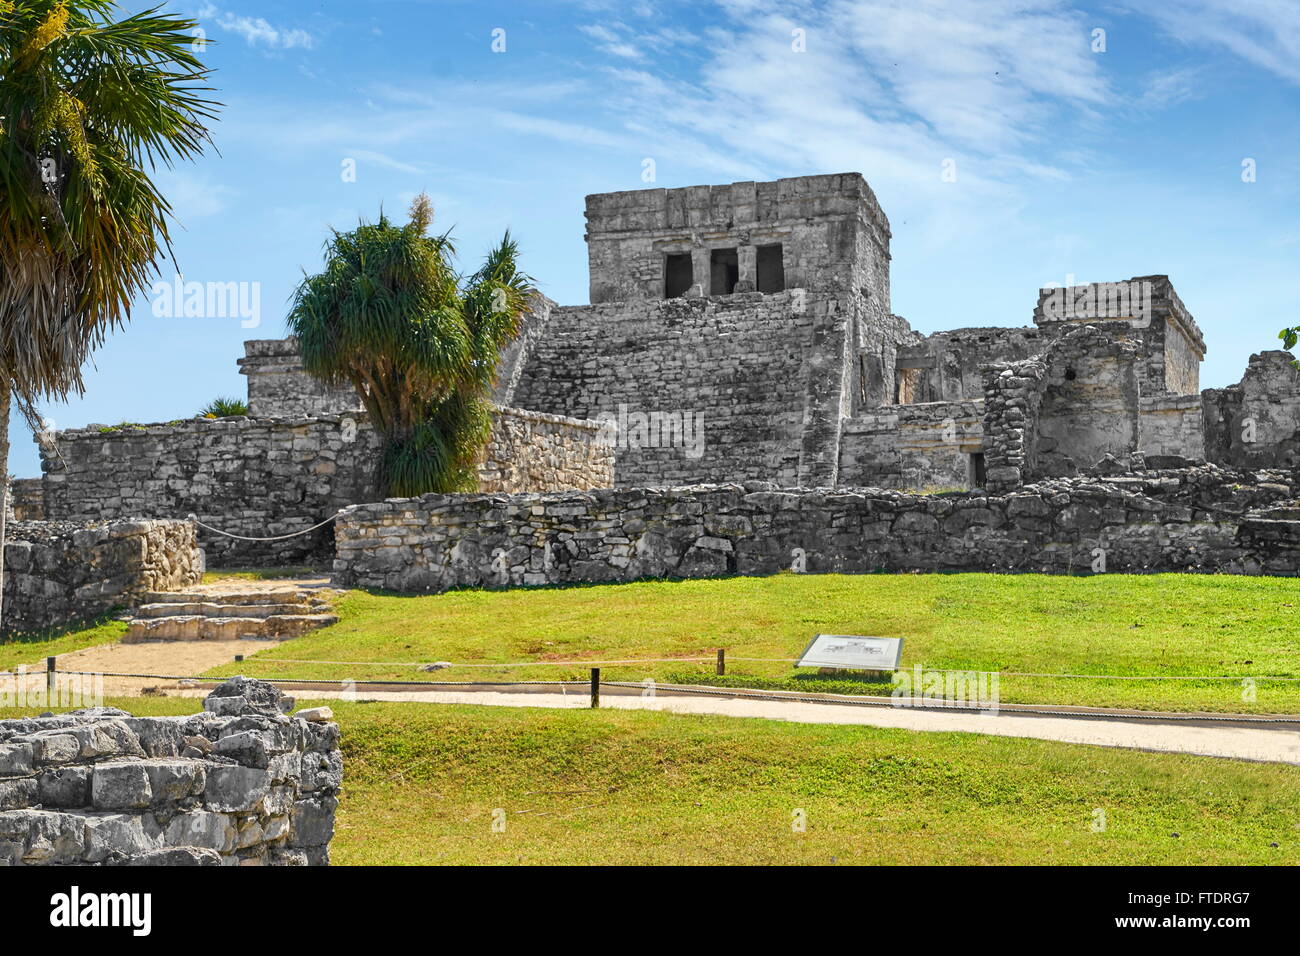 Ancient Maya Ruins, Main Temple of Tulum, Yucatan Peninsula, Mexico Stock Photo